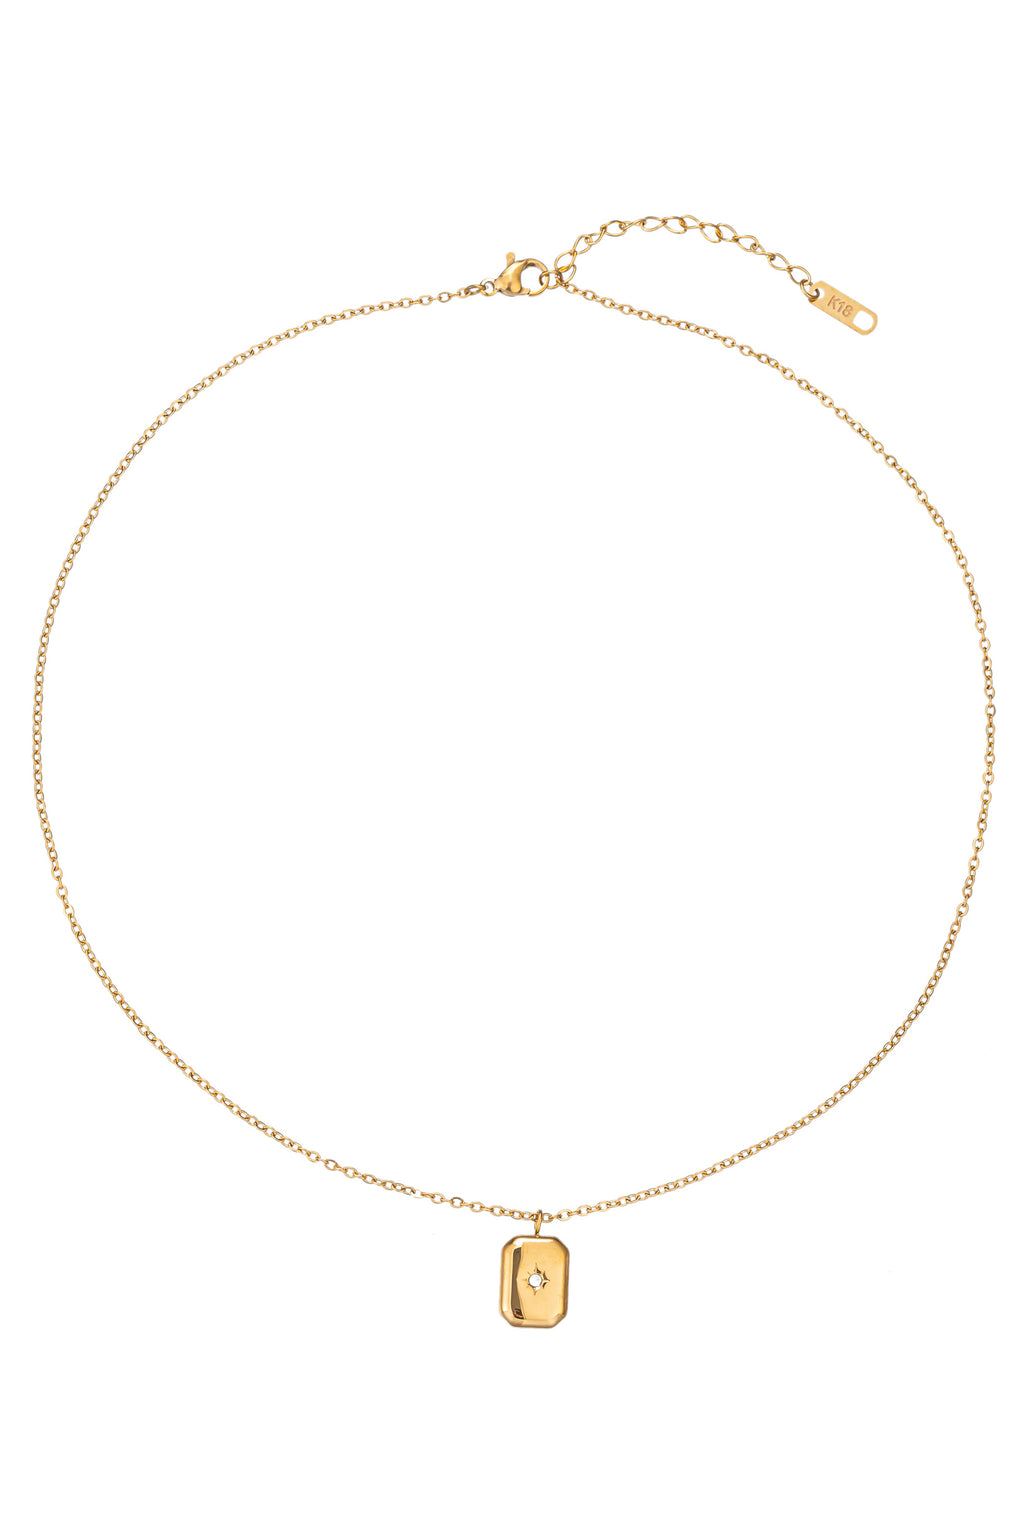 Gold tone titanium pendant square pendant necklace studded with CZ crystals.